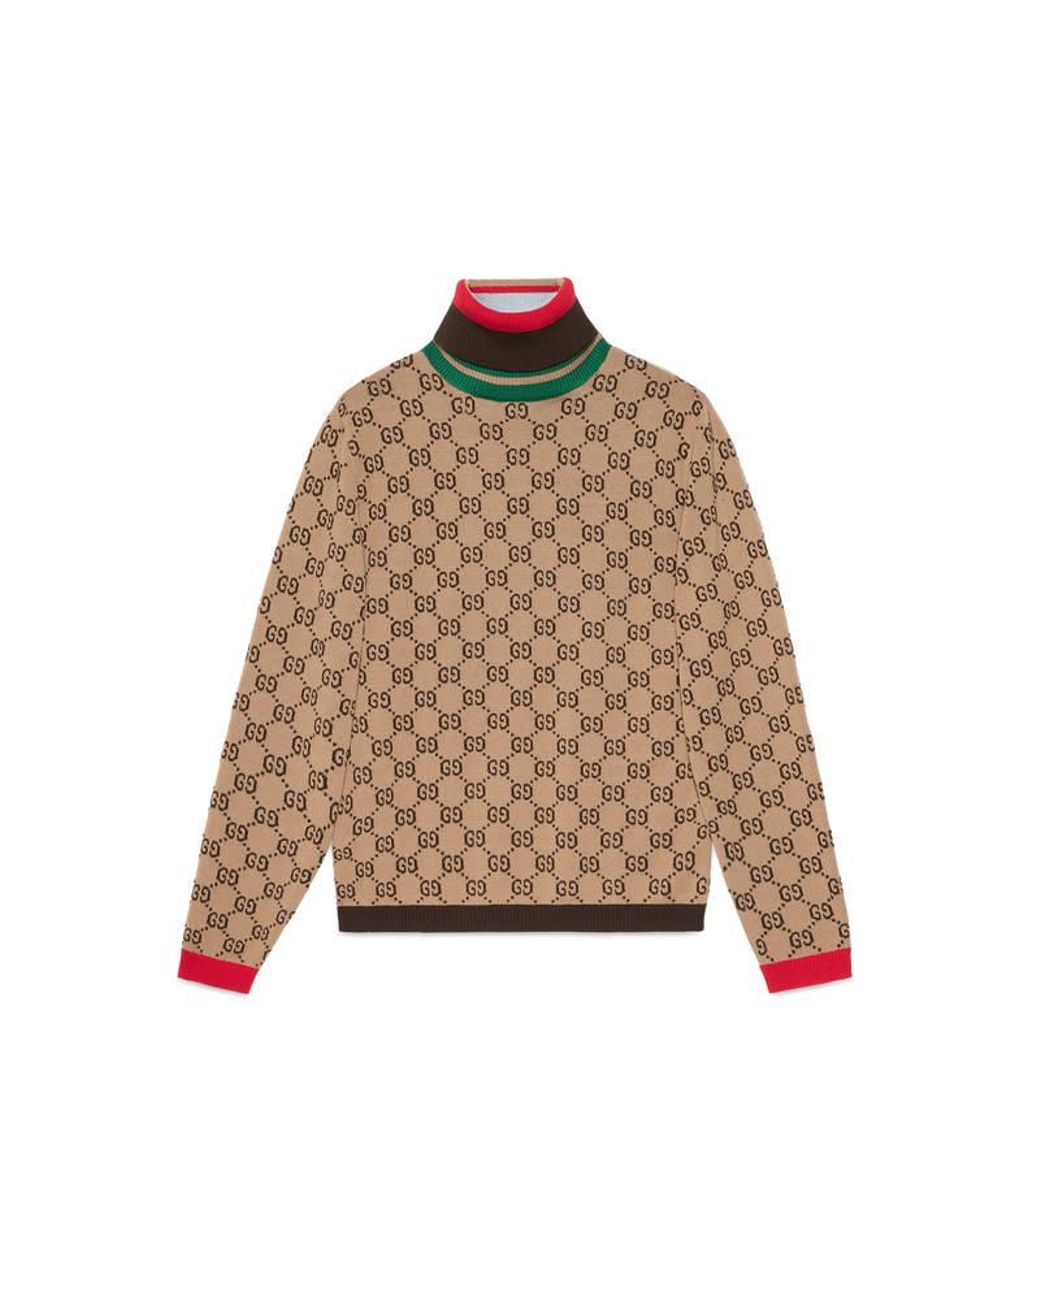 Gucci Gg Jacquard Wool Turtleneck for Men | Lyst